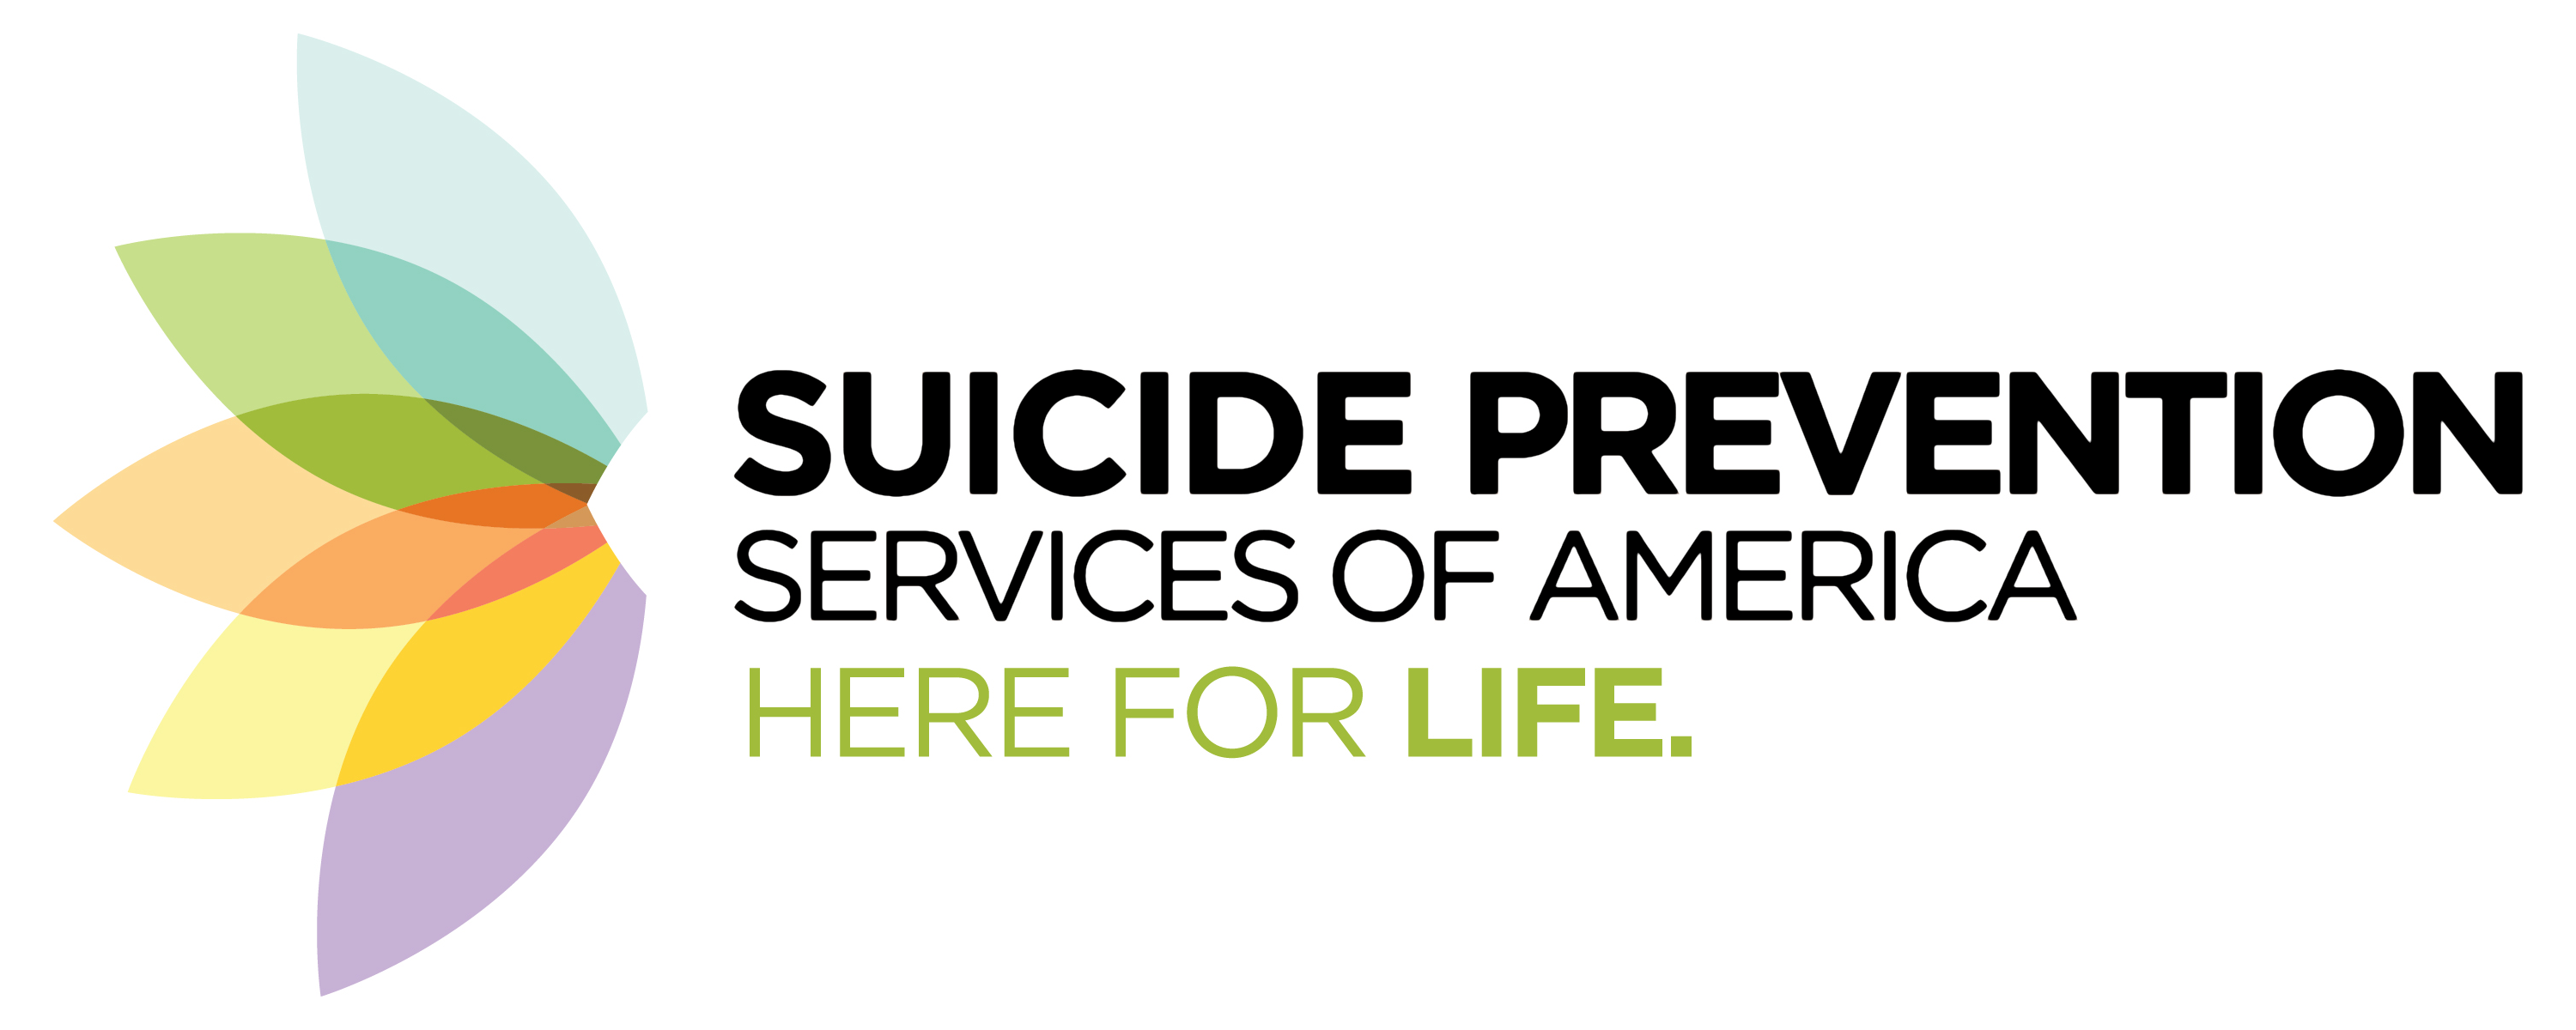 Suicide Prevention Services of America